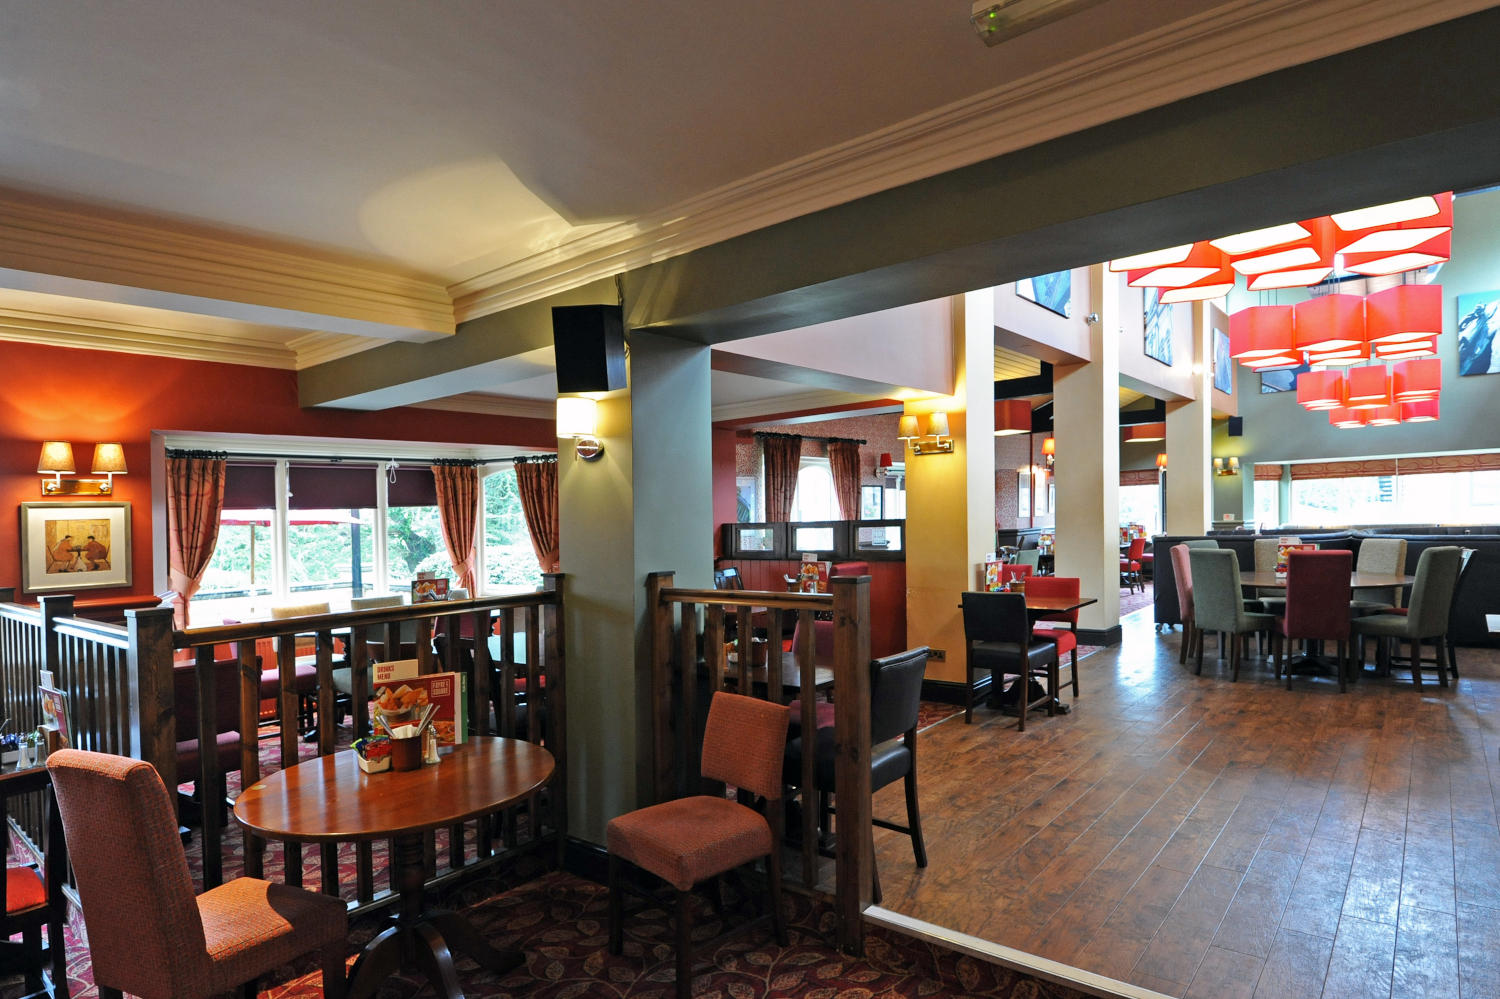 Restaurant interior Premier Inn Leicester North West hotel Leicester 03333 211087